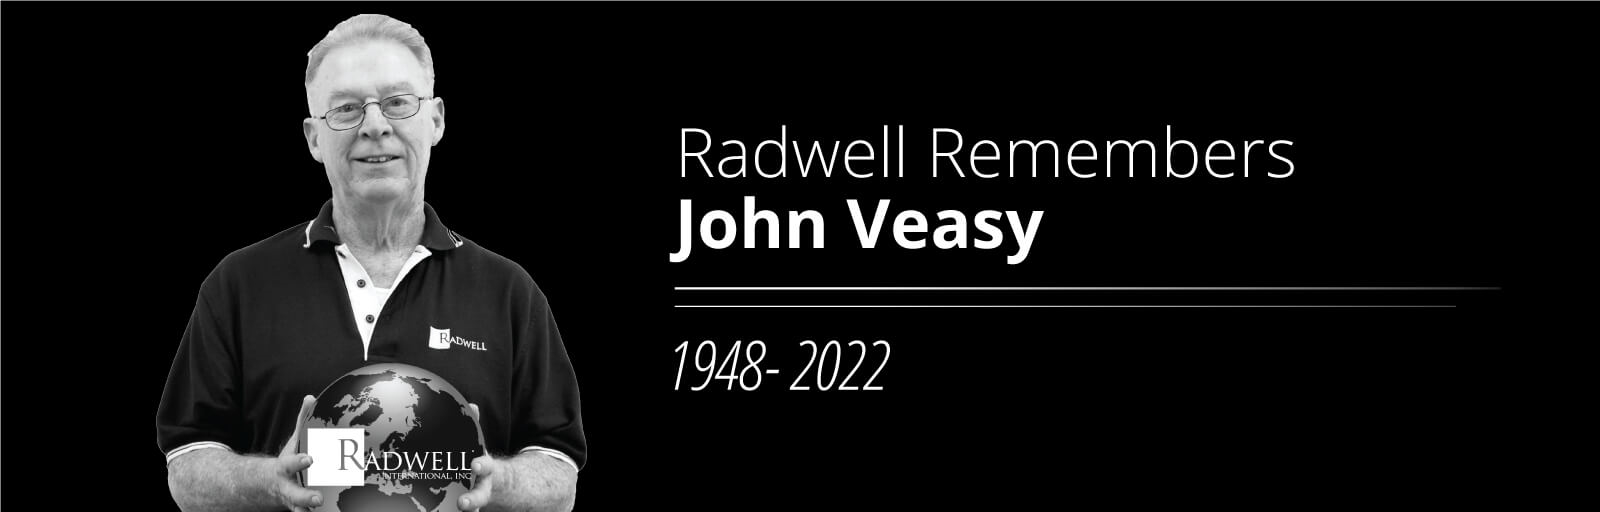 Radwell Remembers John Veasy